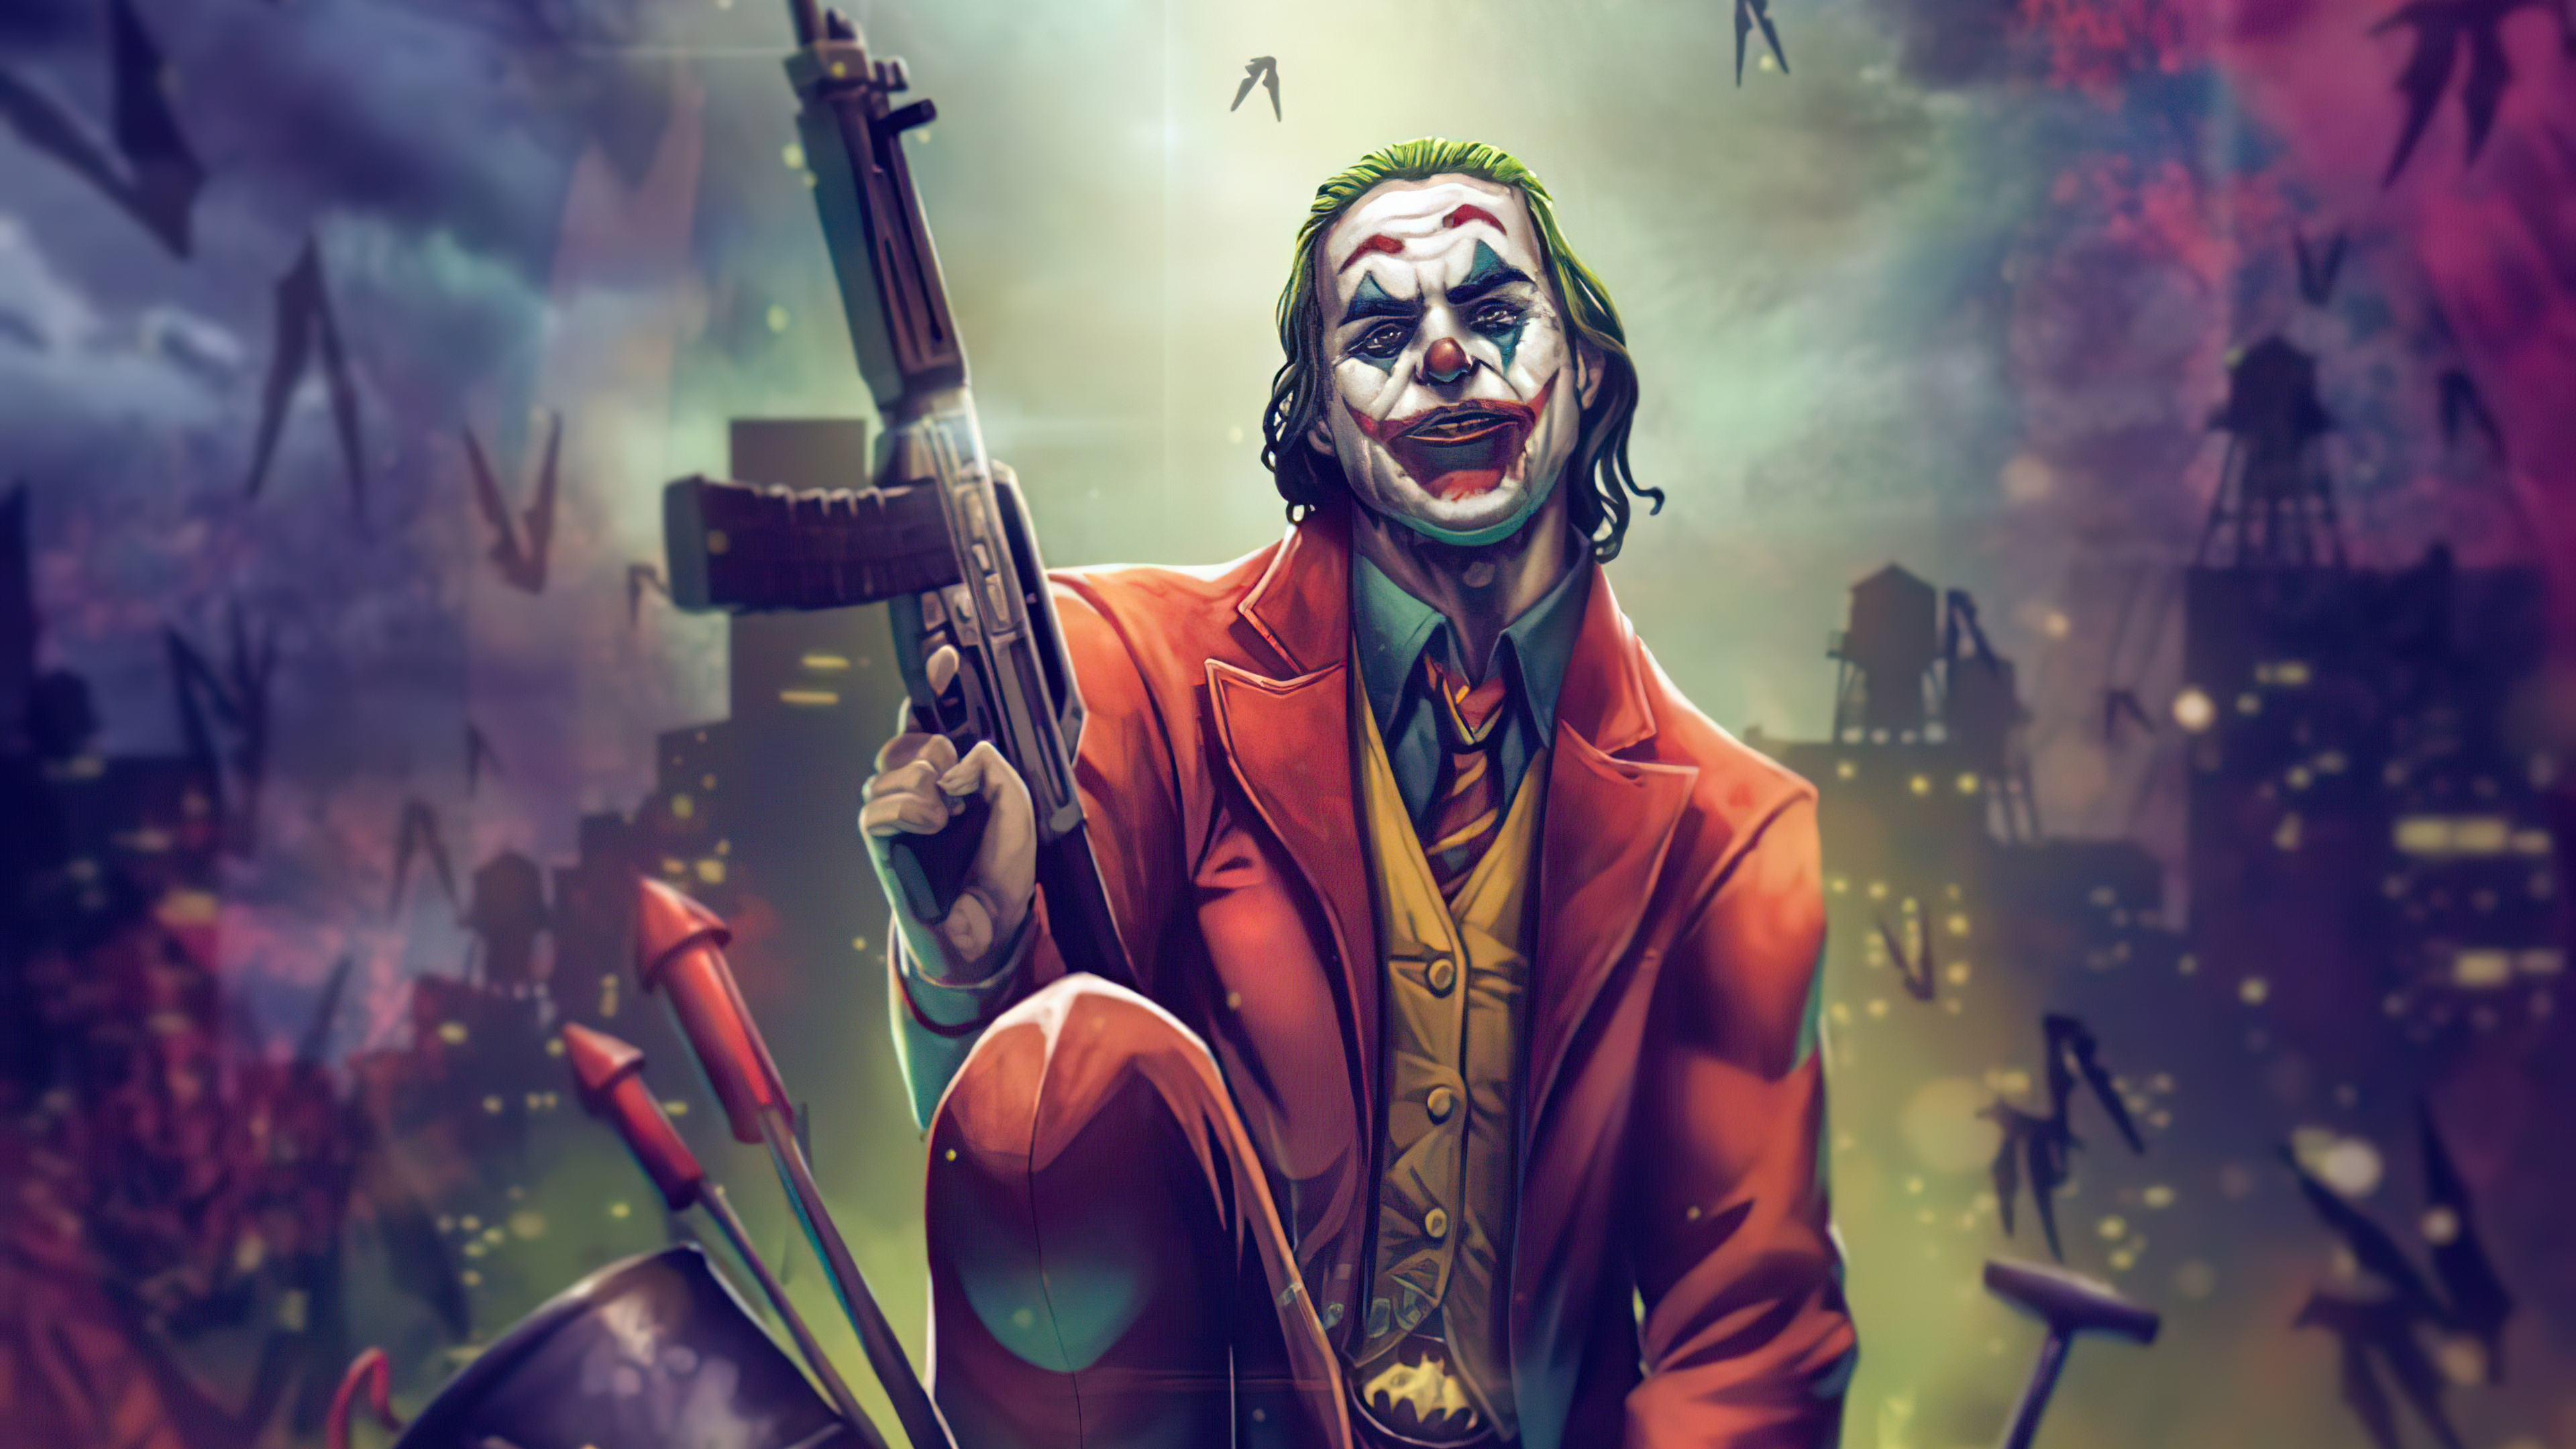 Comics Joker 4k Ultra HD Wallpaper by Vinz El Tabanas